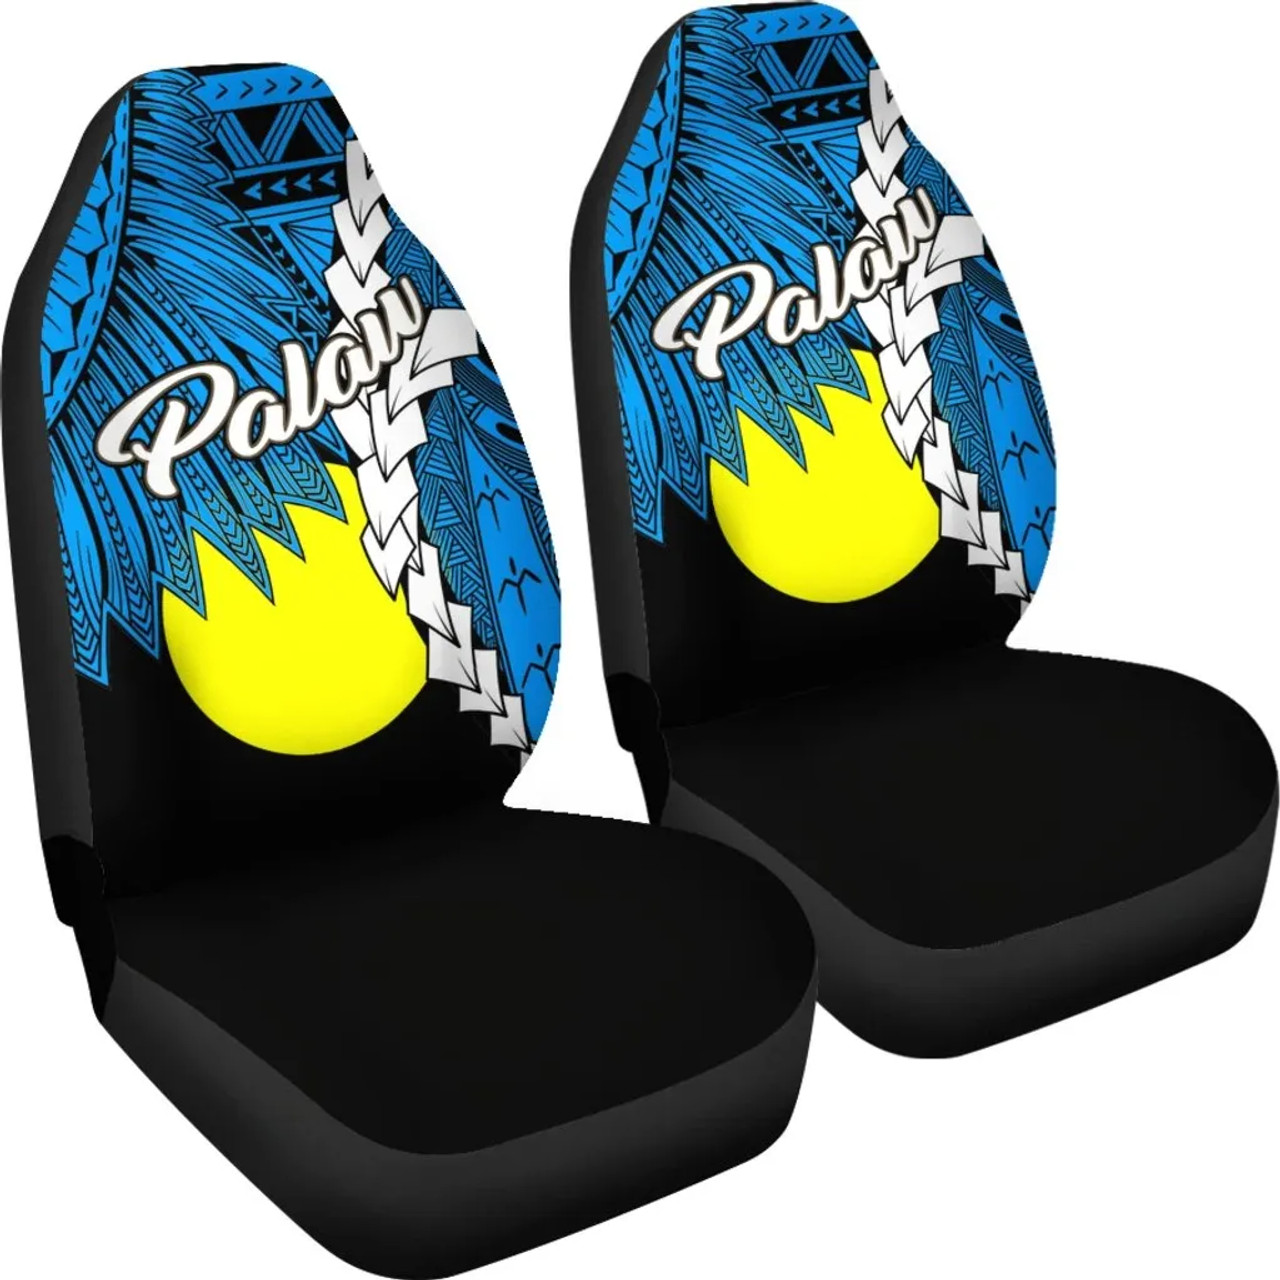 Palau Polynesian Car Seat Covers - Tribal Wave Tattoo Flag Style